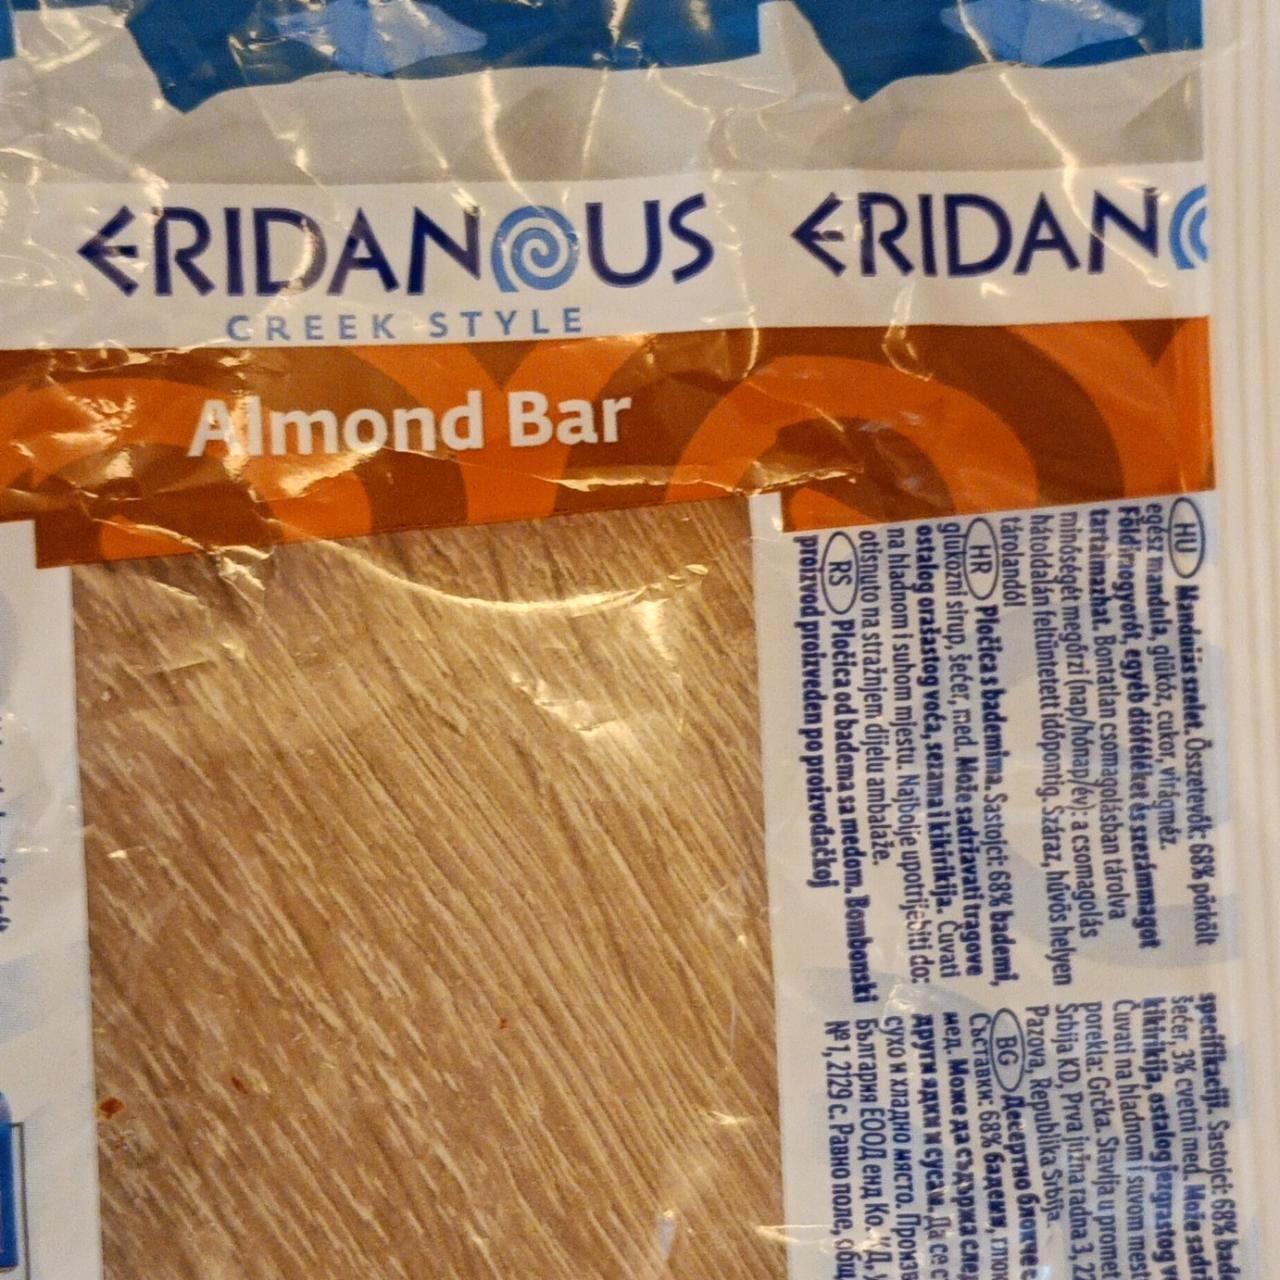 Képek - Almond bar Eridanous